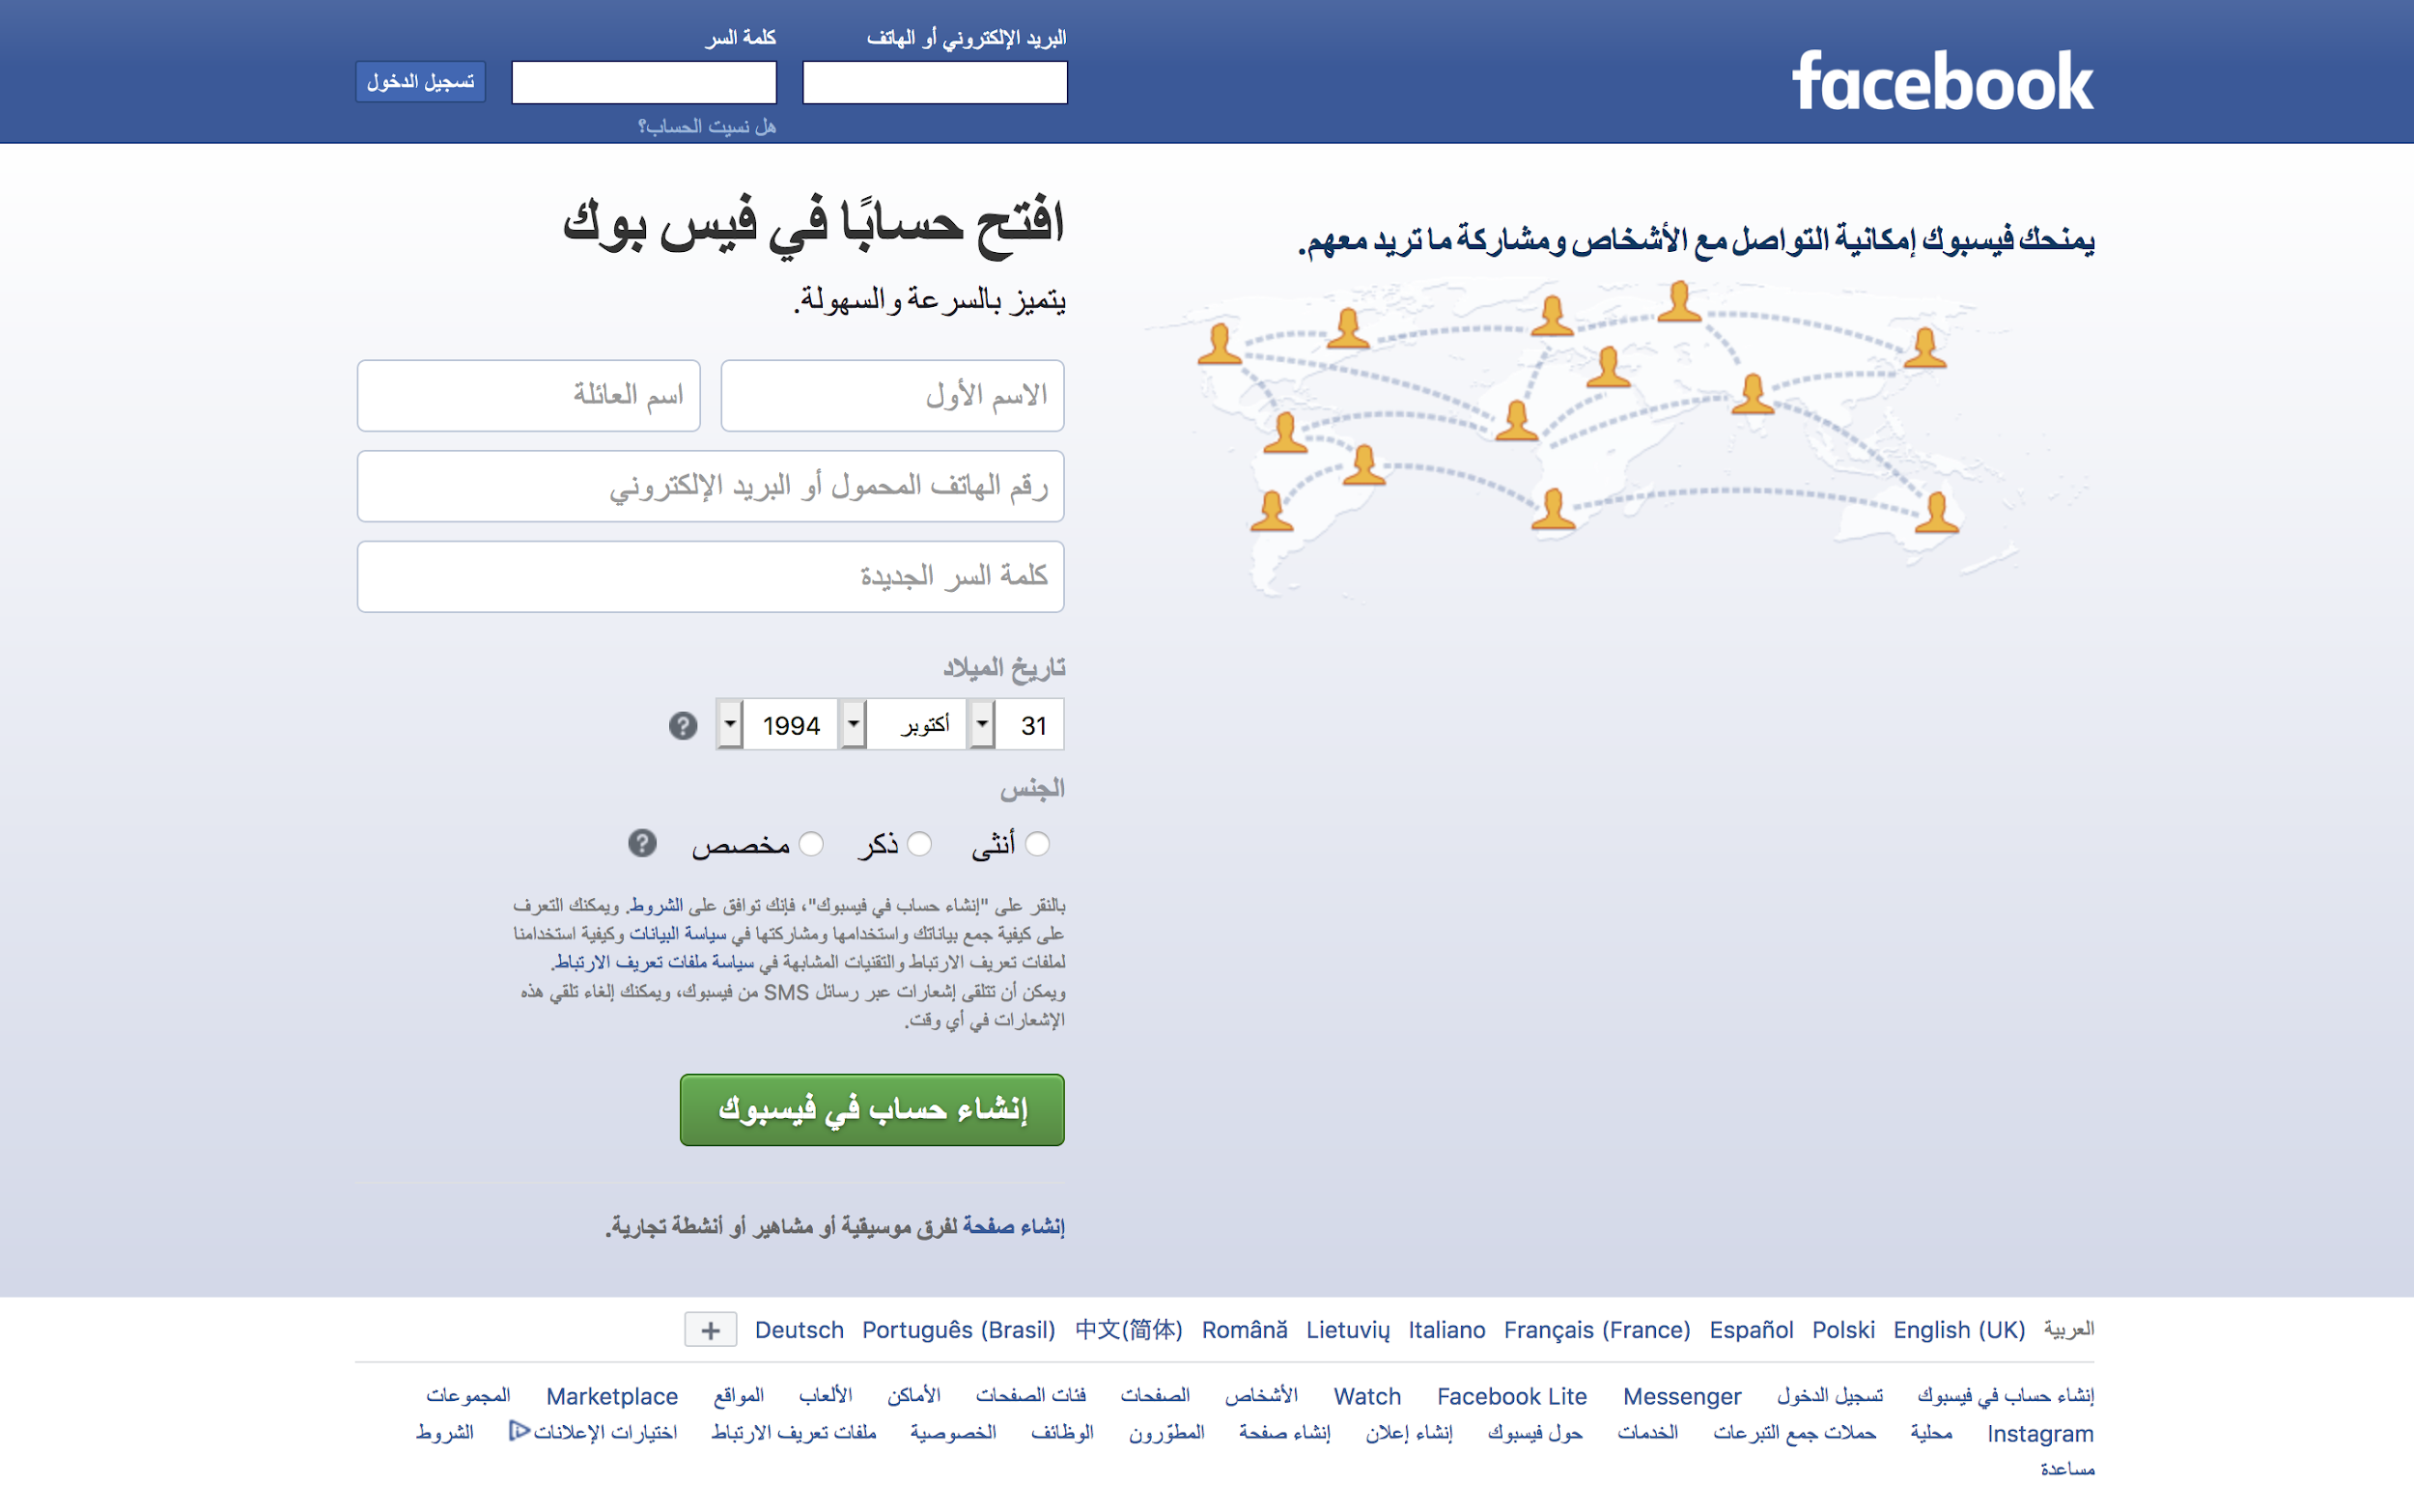 Cross-cultural user interface design Facebook in Arabic